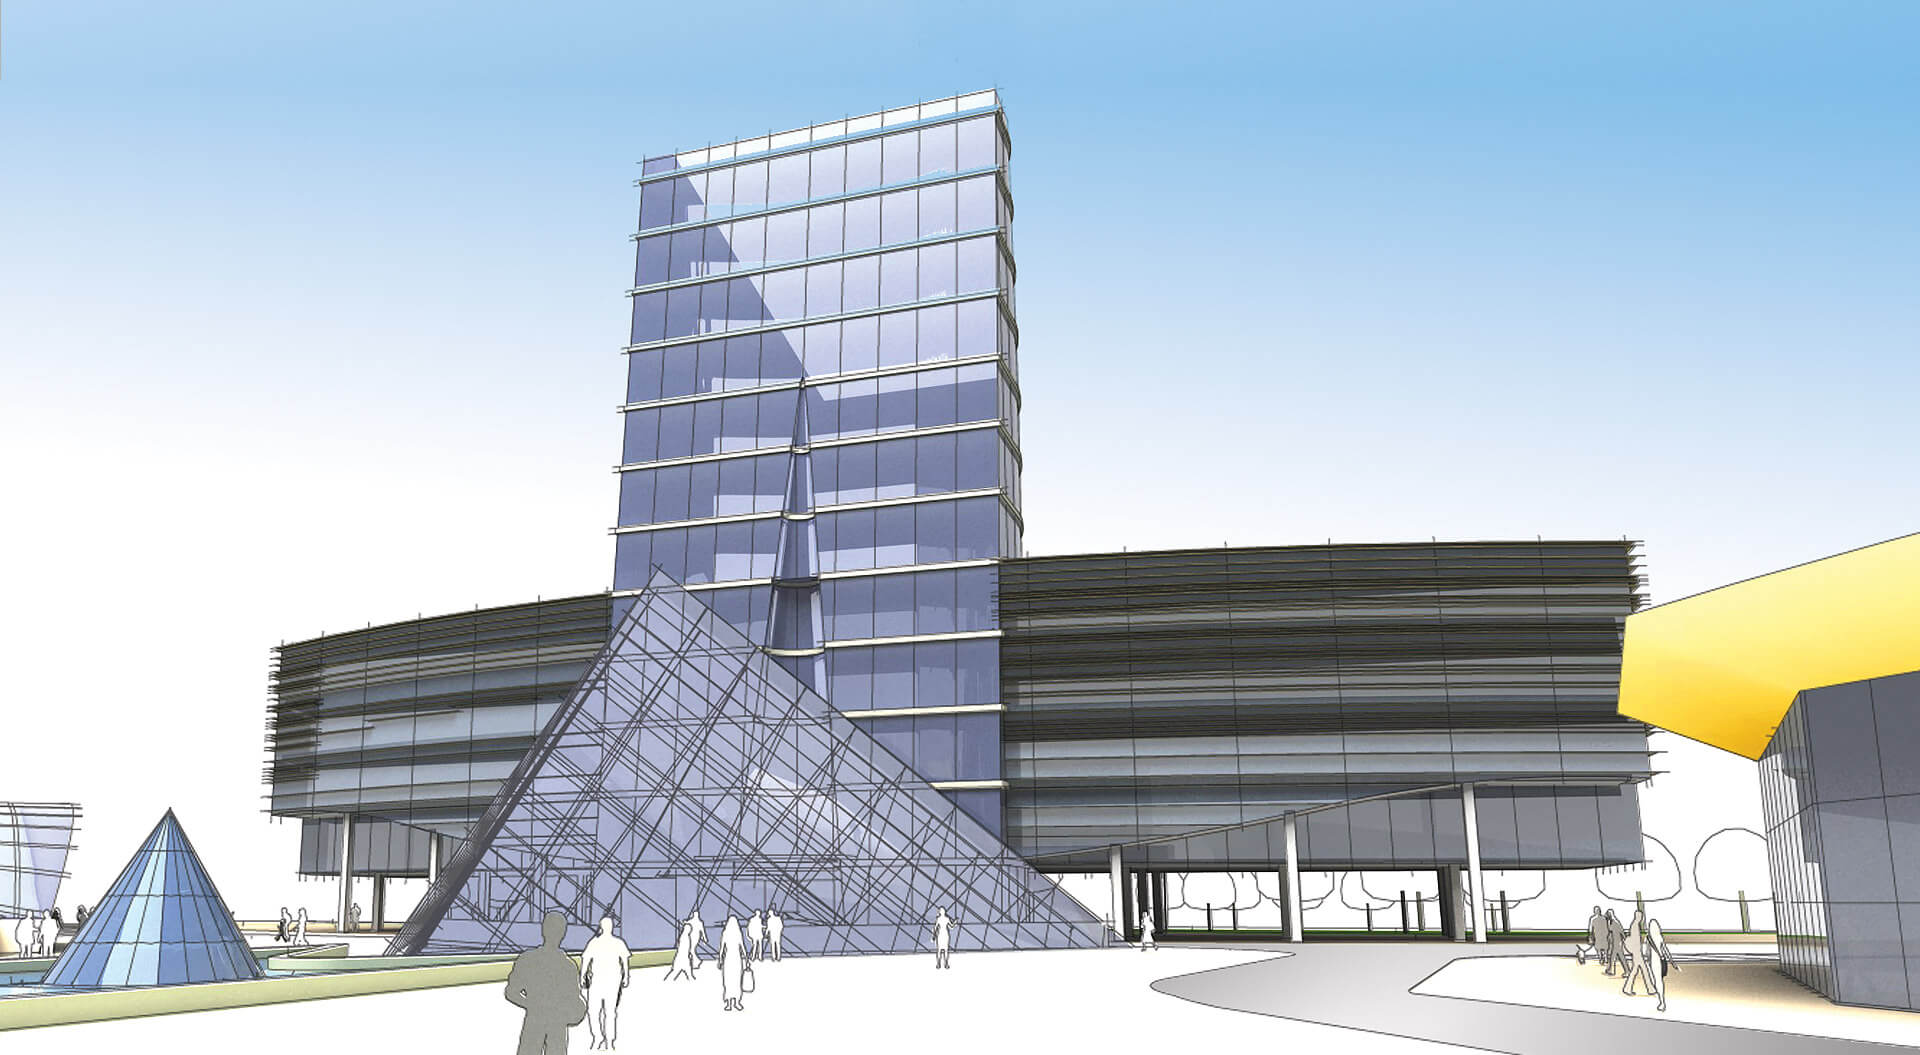 Port City shopping mall  architecture and master planning Vinnitsa Ukraine